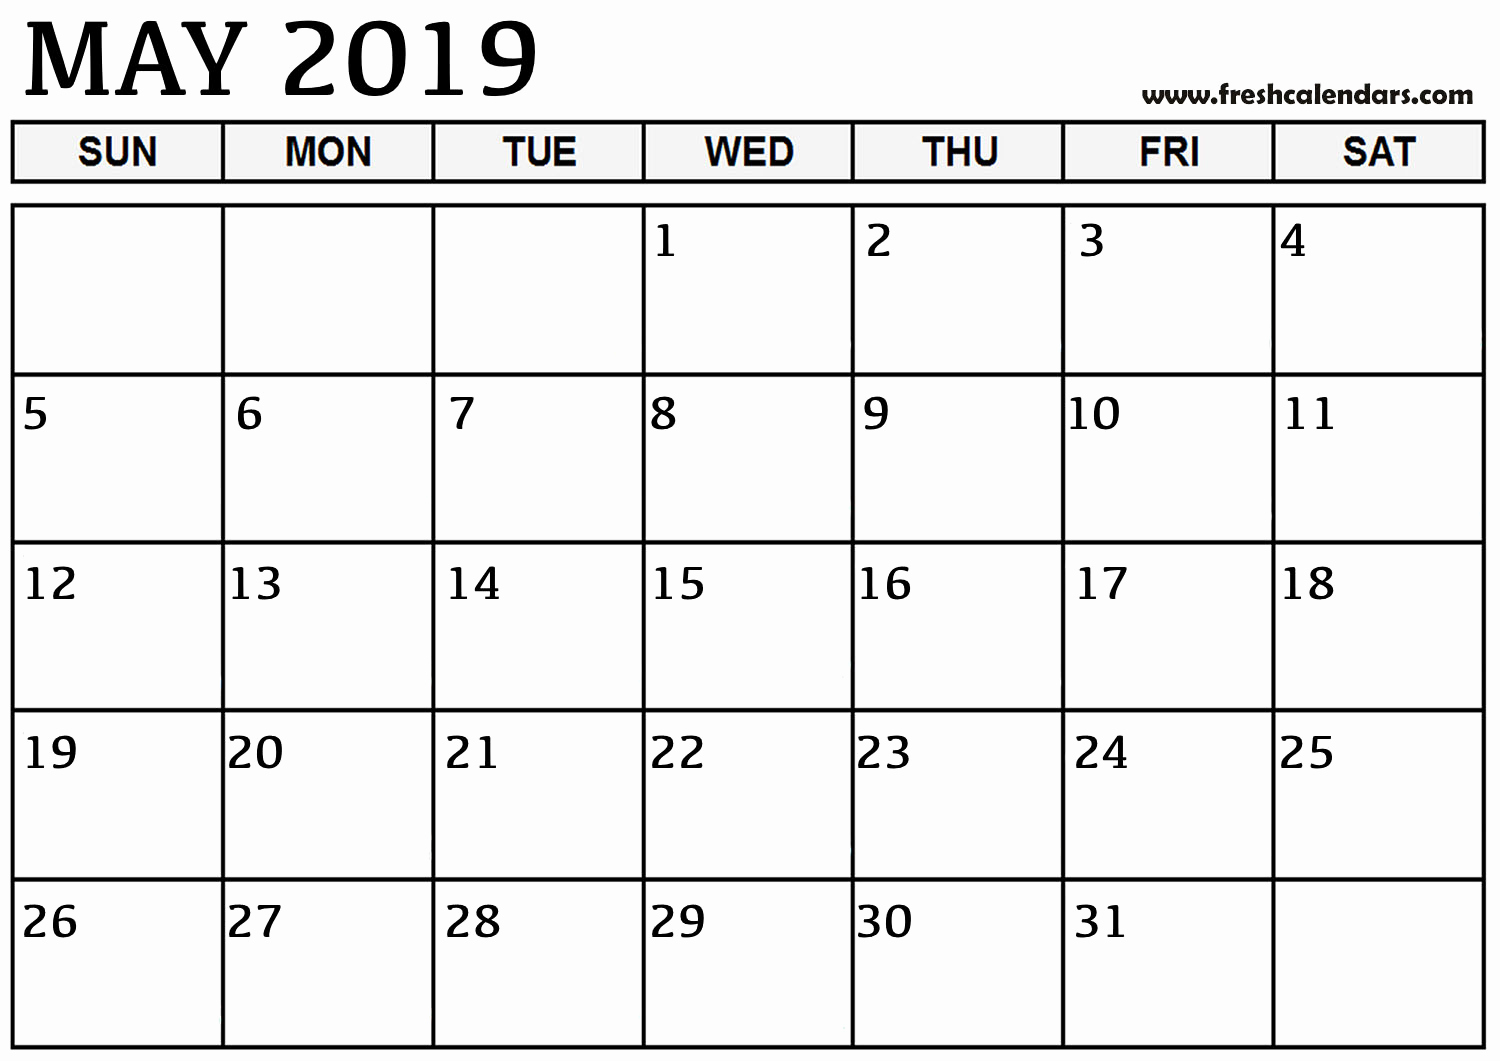 Weekly Calendar Template 2019 Best Of May 2019 Calendar Printable Fresh Calendars